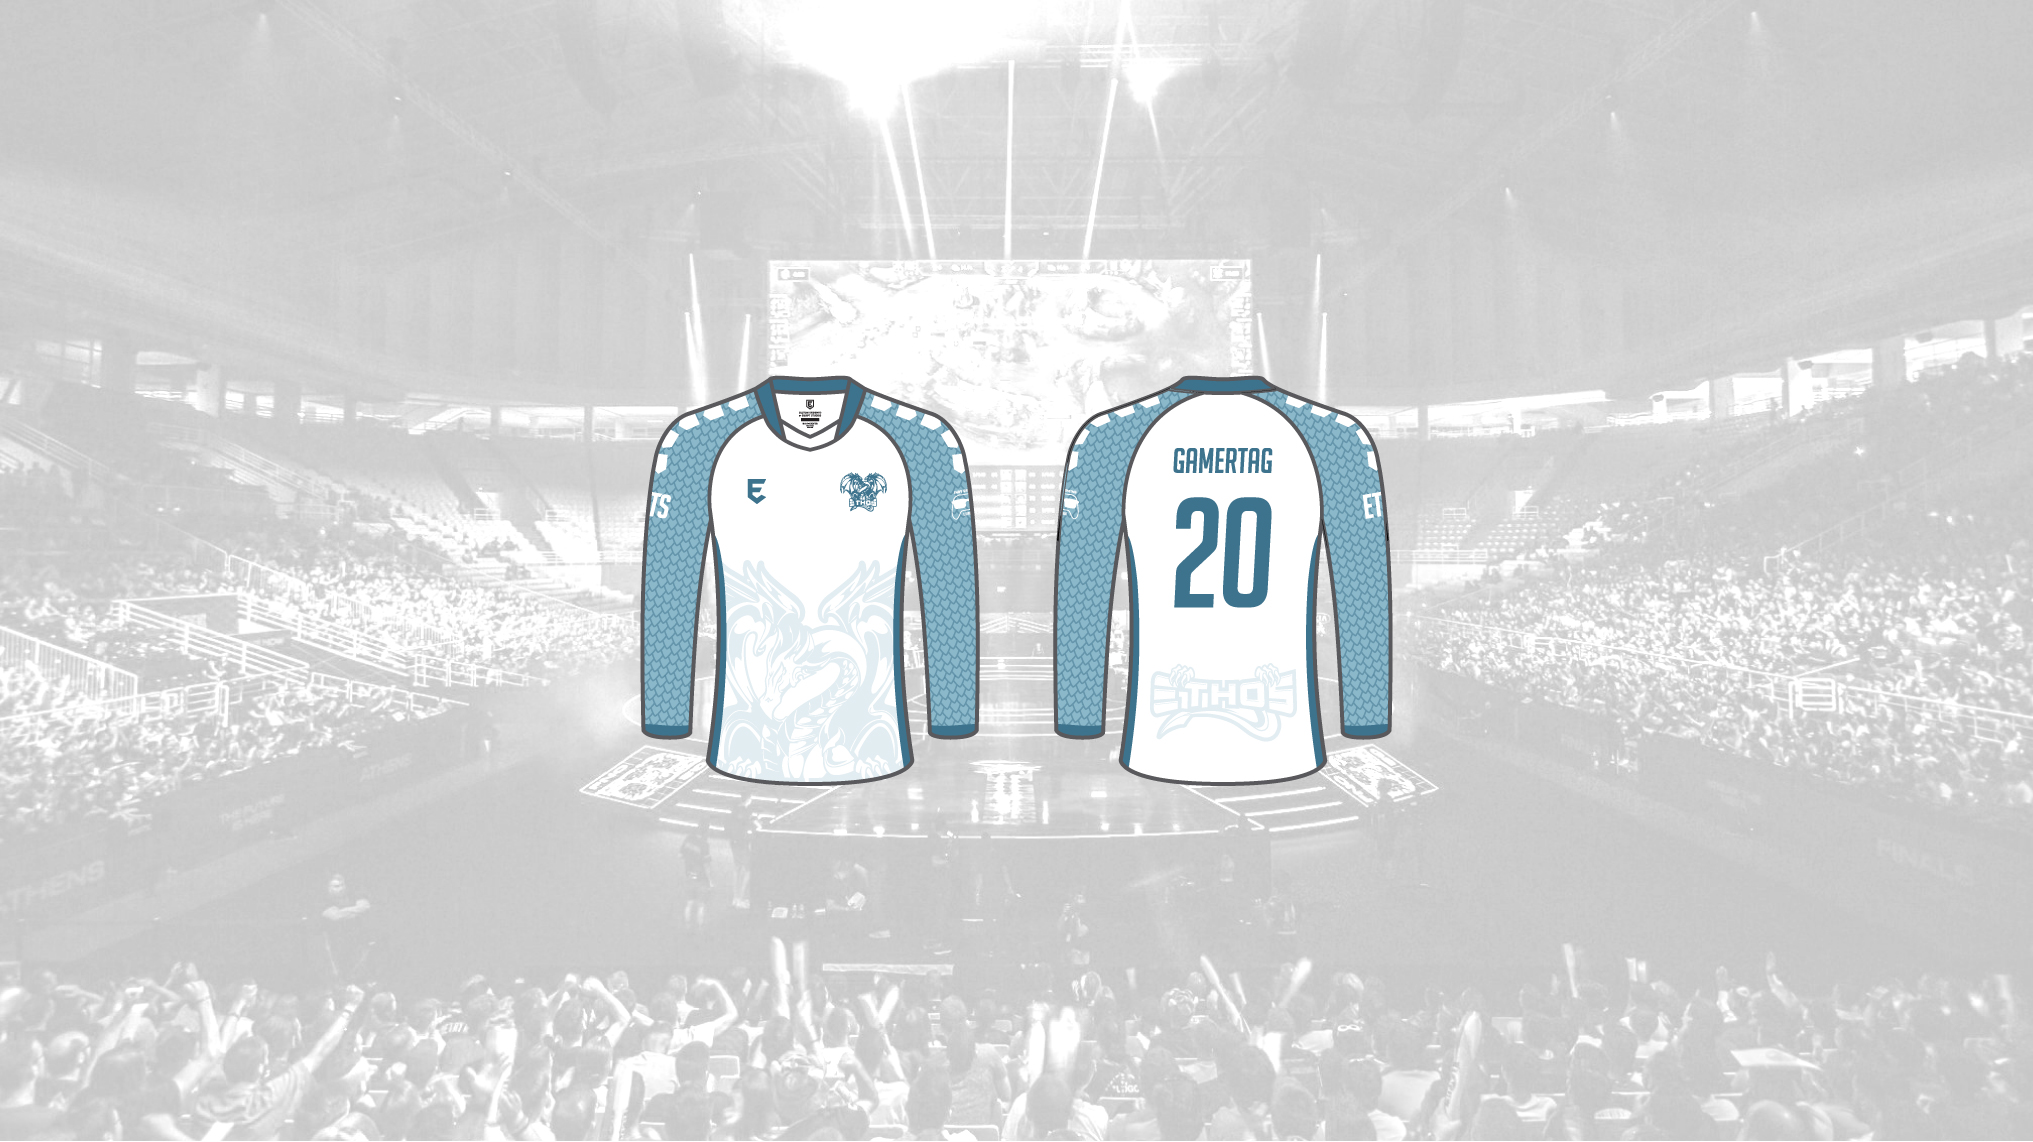 Ethos Esports custom short-sleeved gaming jersey design